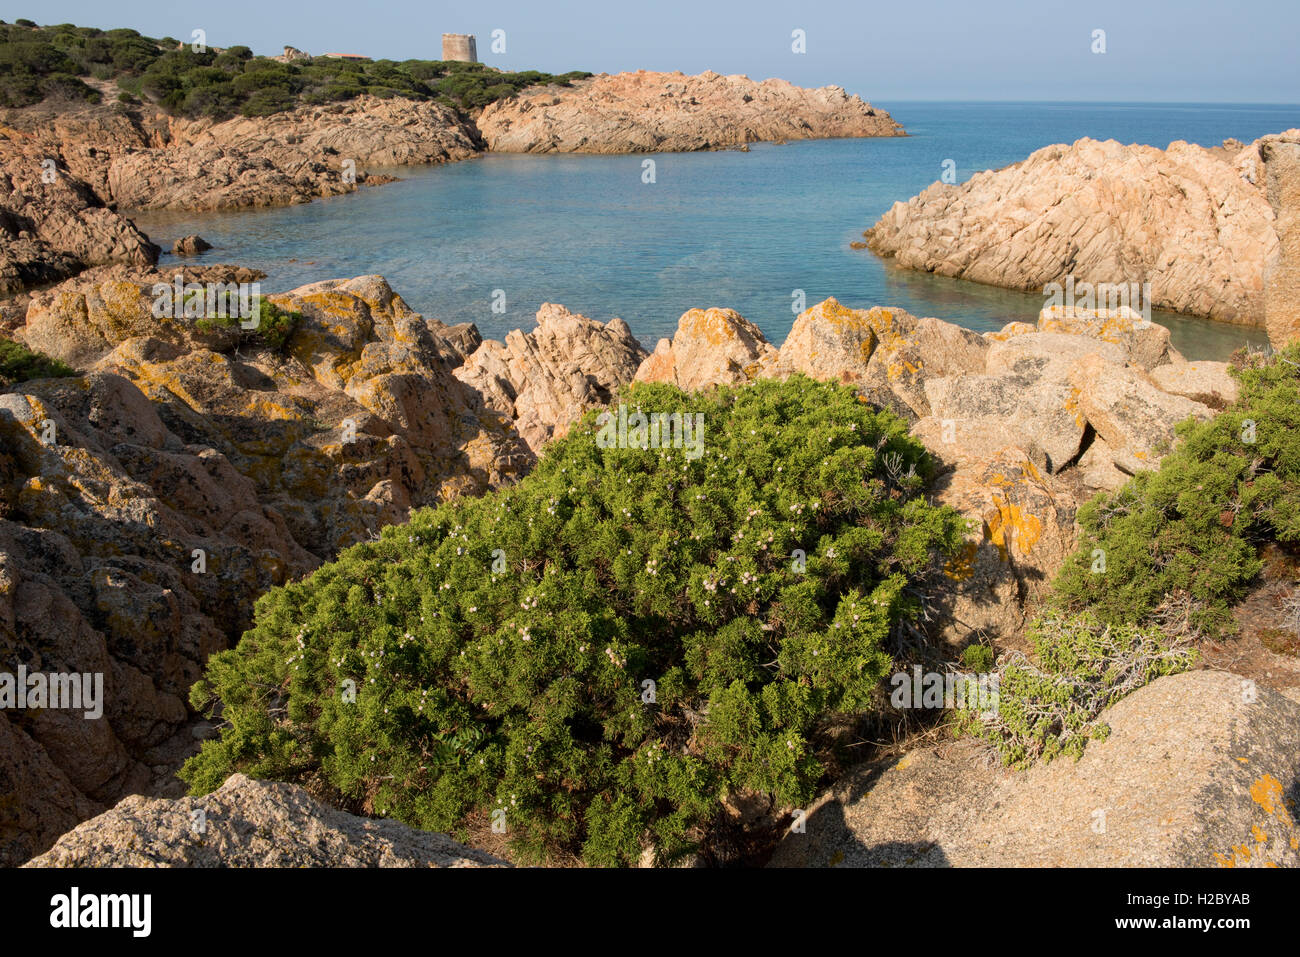 Phoenician juniper or arar, Juniperus phoenicia, with berries on the red granite coast of Isola Rosa, Sardinia Stock Photo